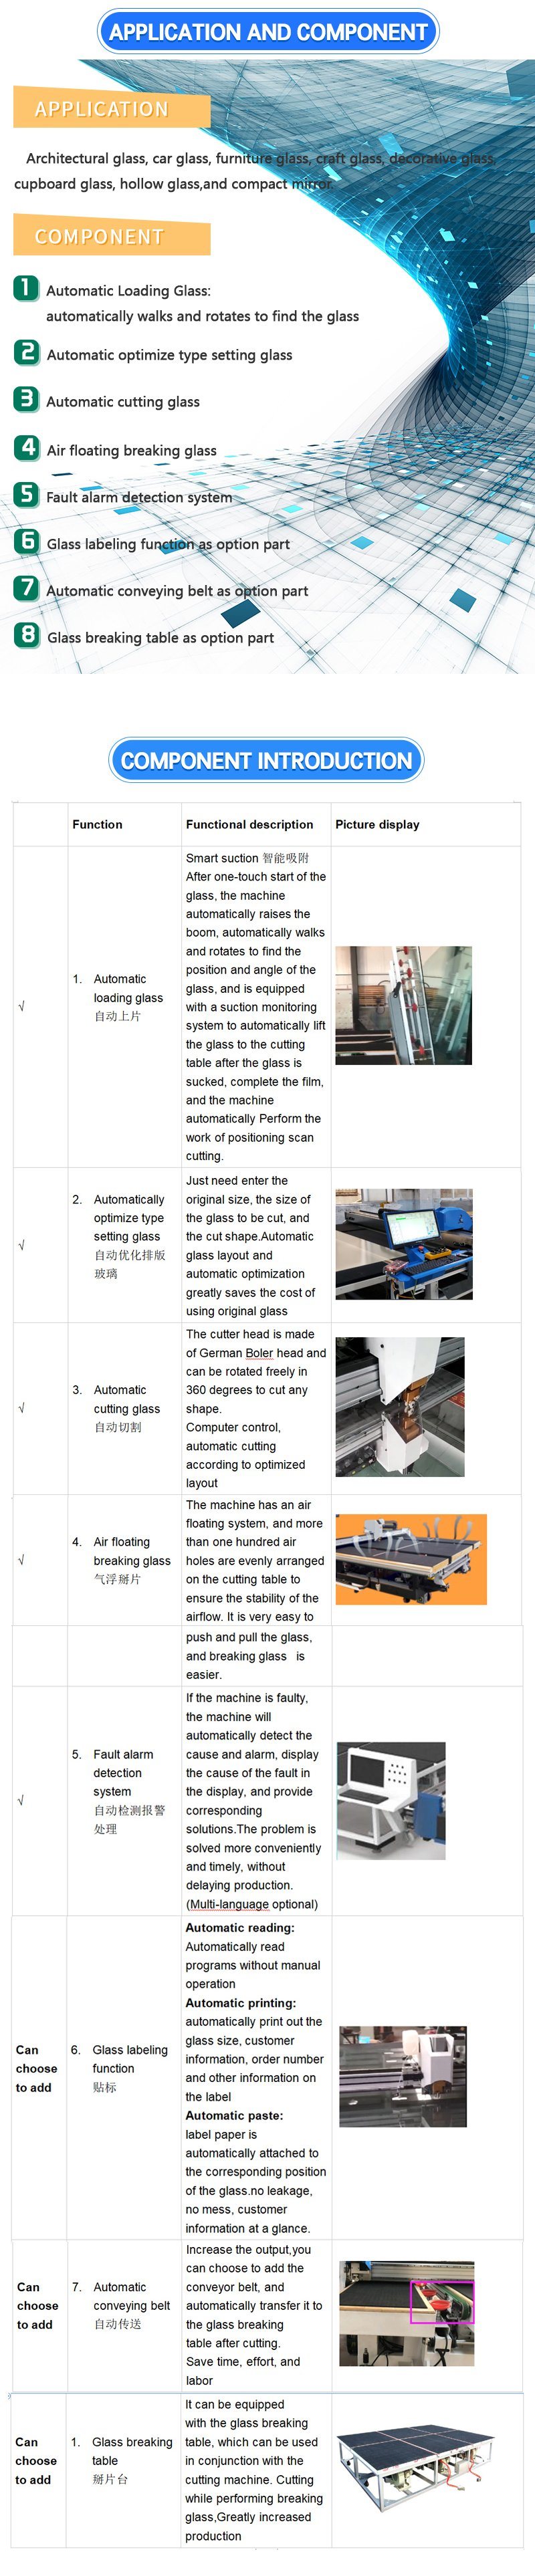 Customized Zxq Glass Cutting Machine Glass Cutting Production Line